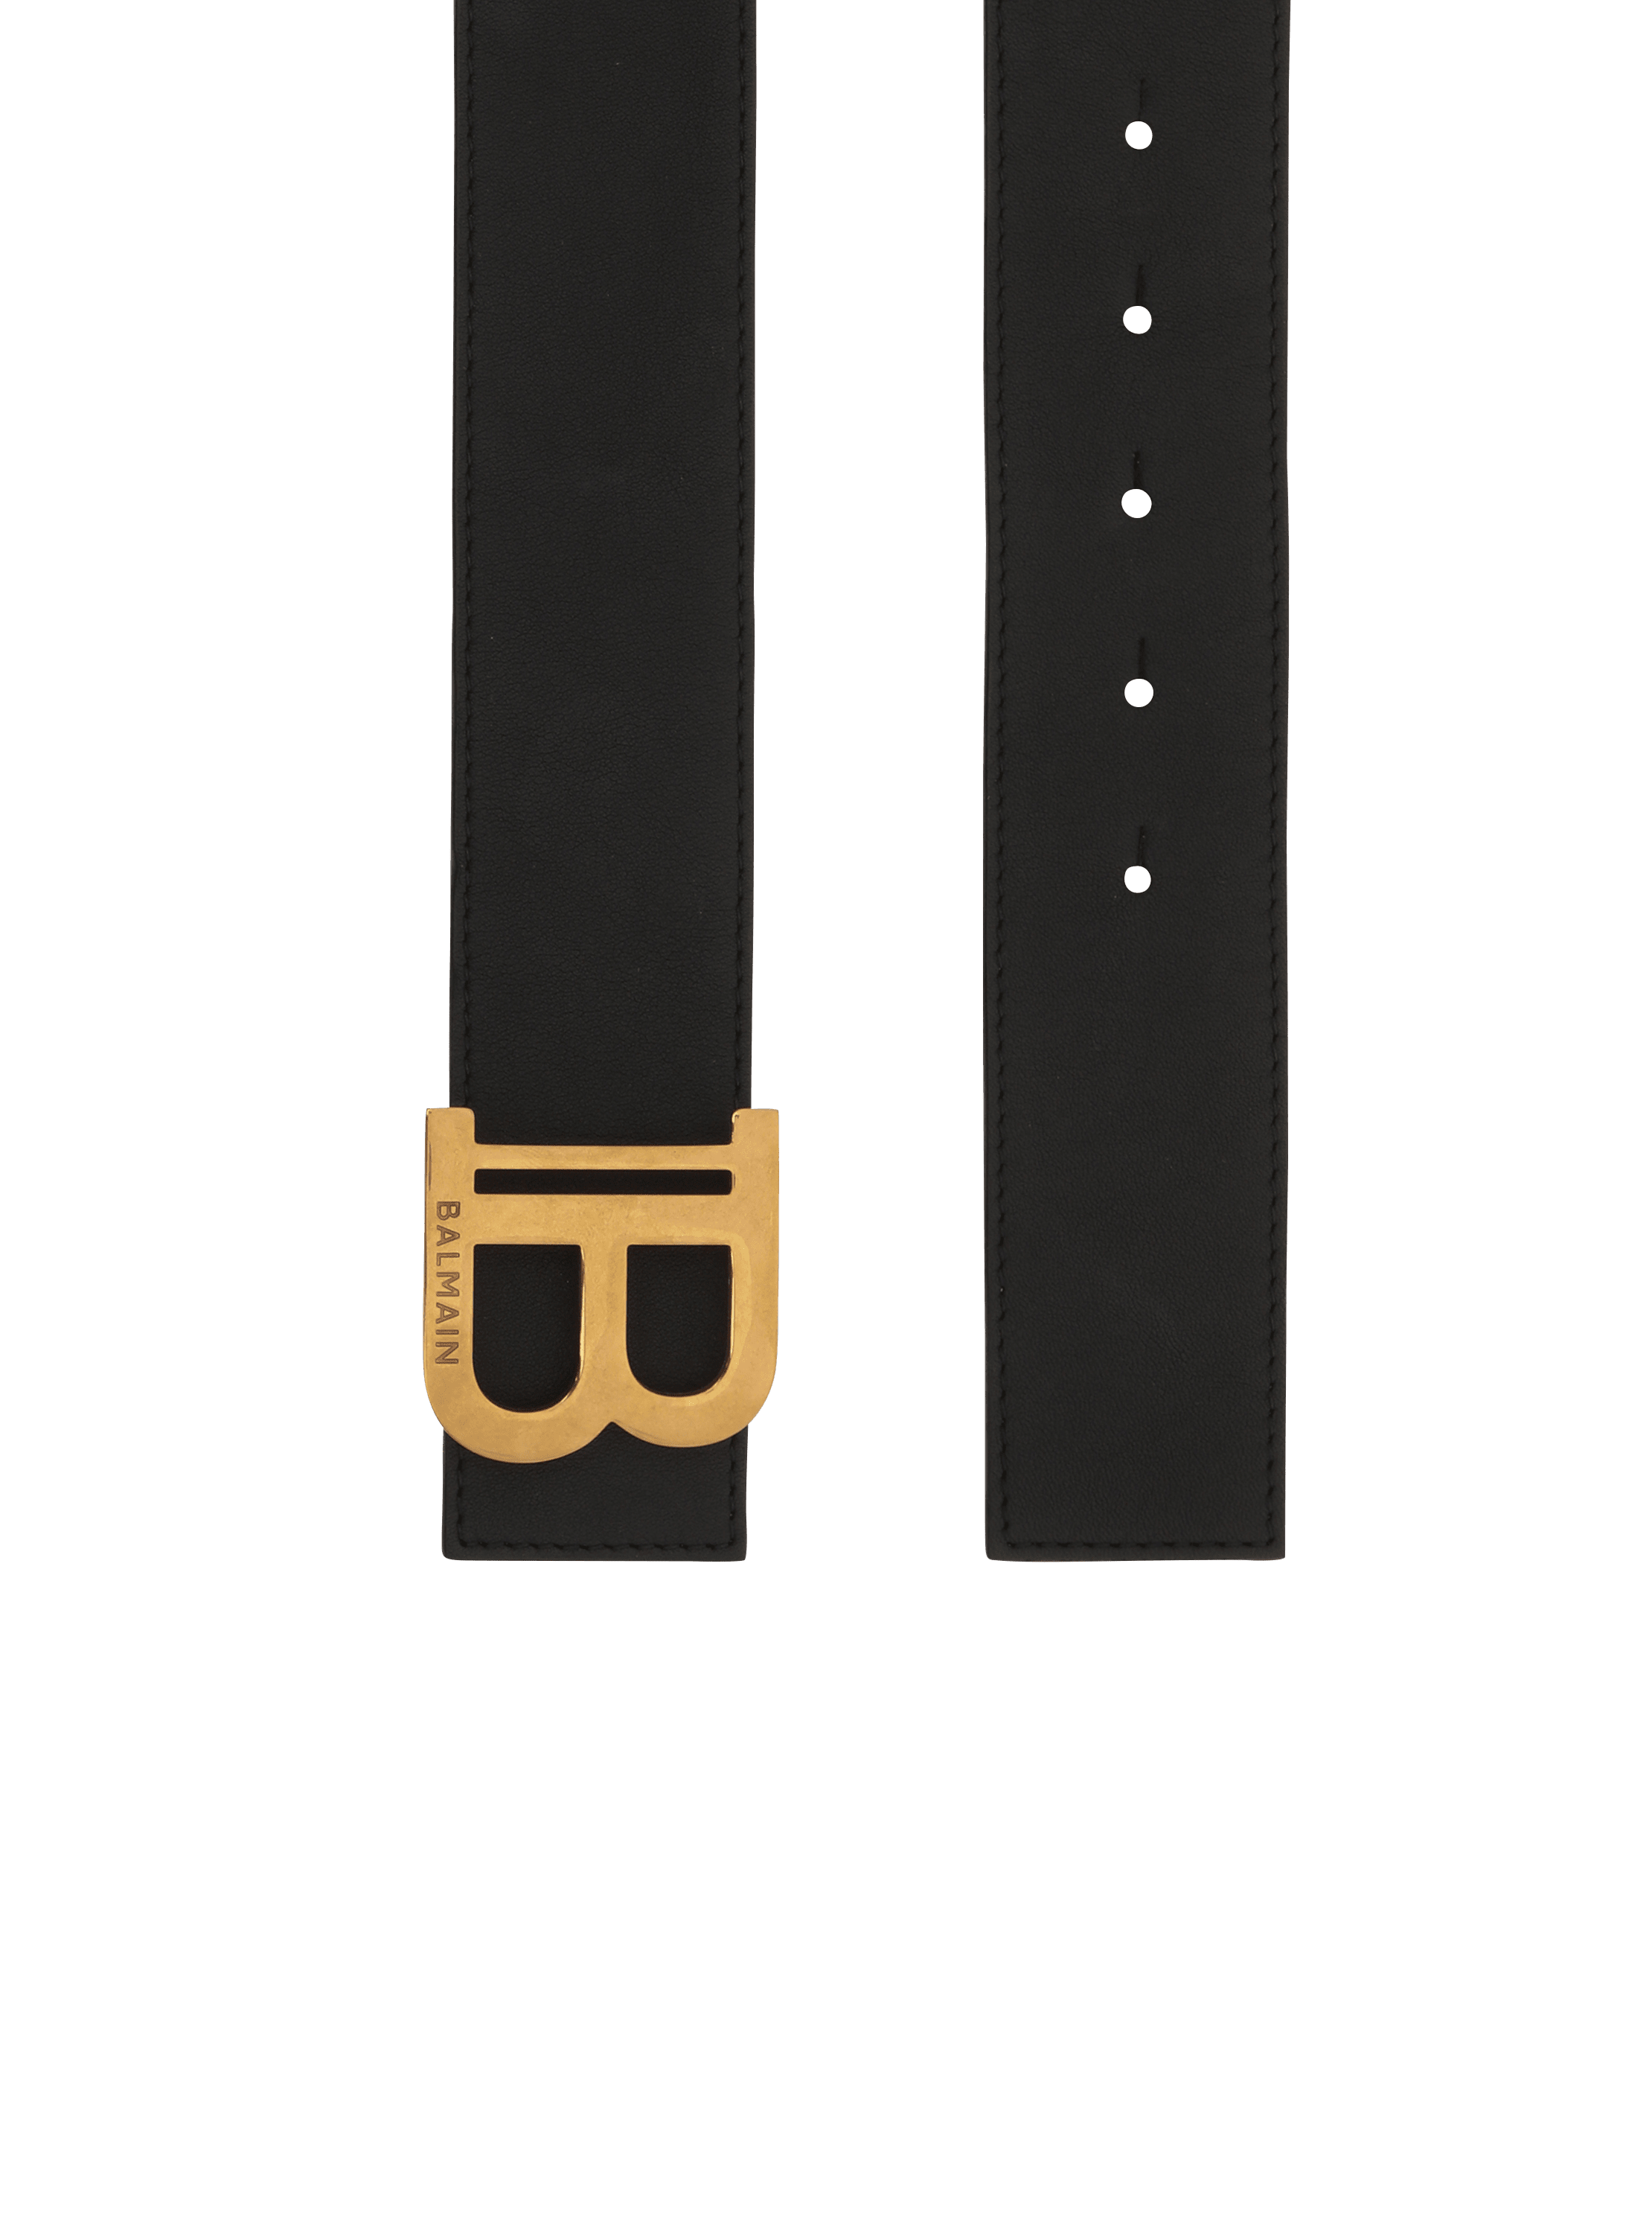 Gürtel B-Belt aus Leder